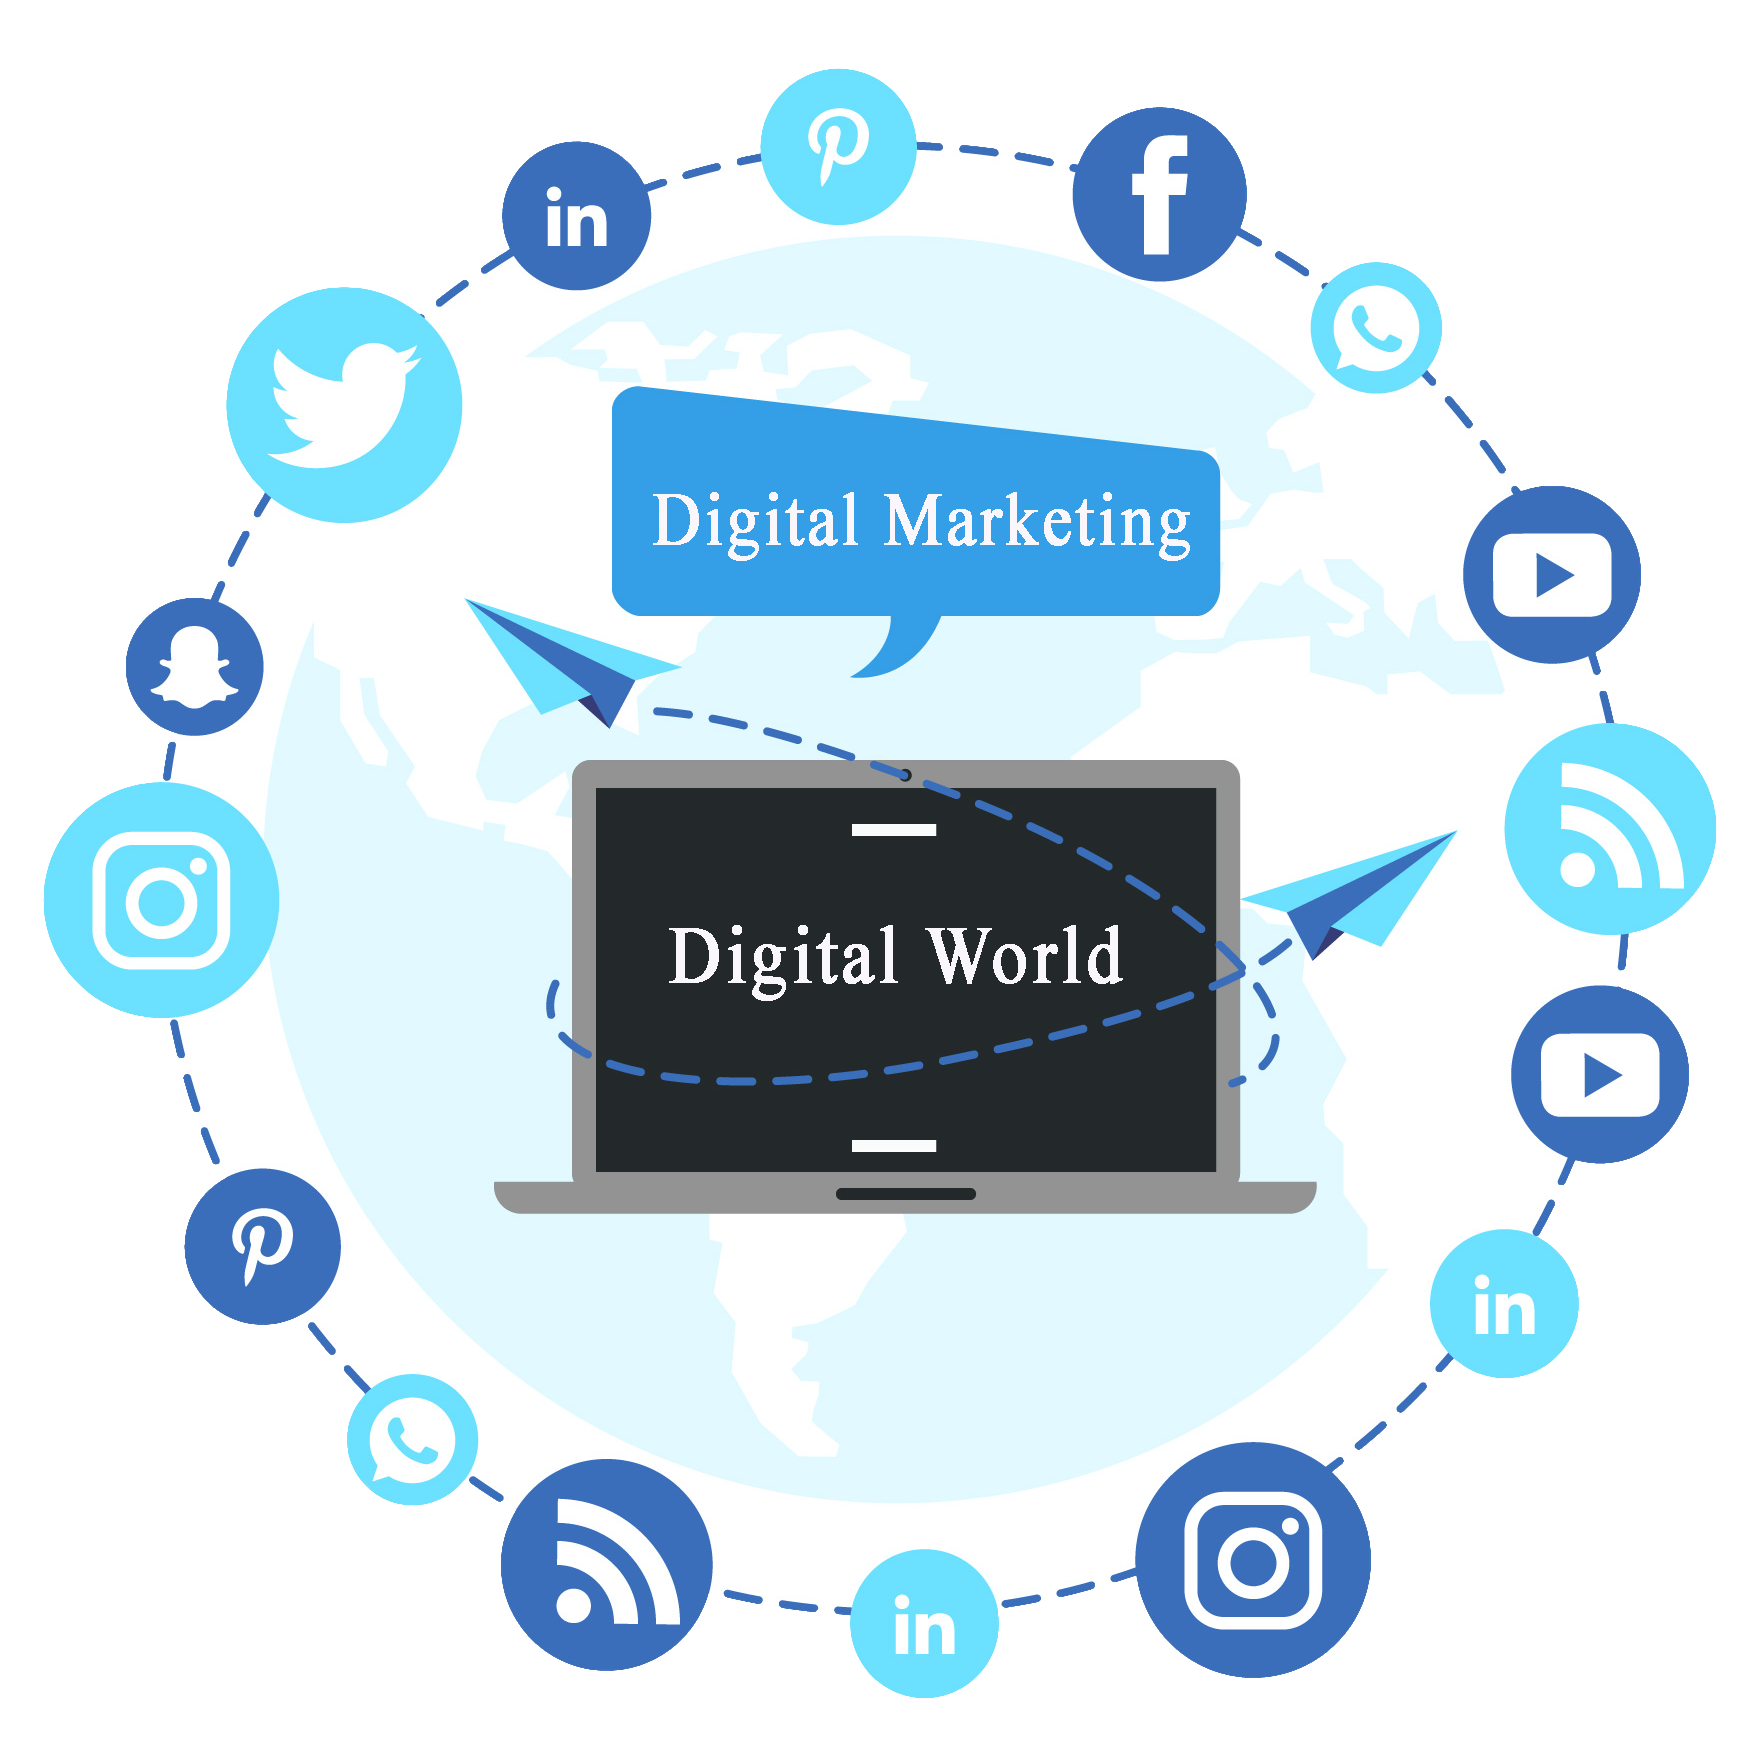 Digital marketing courses in nagpur